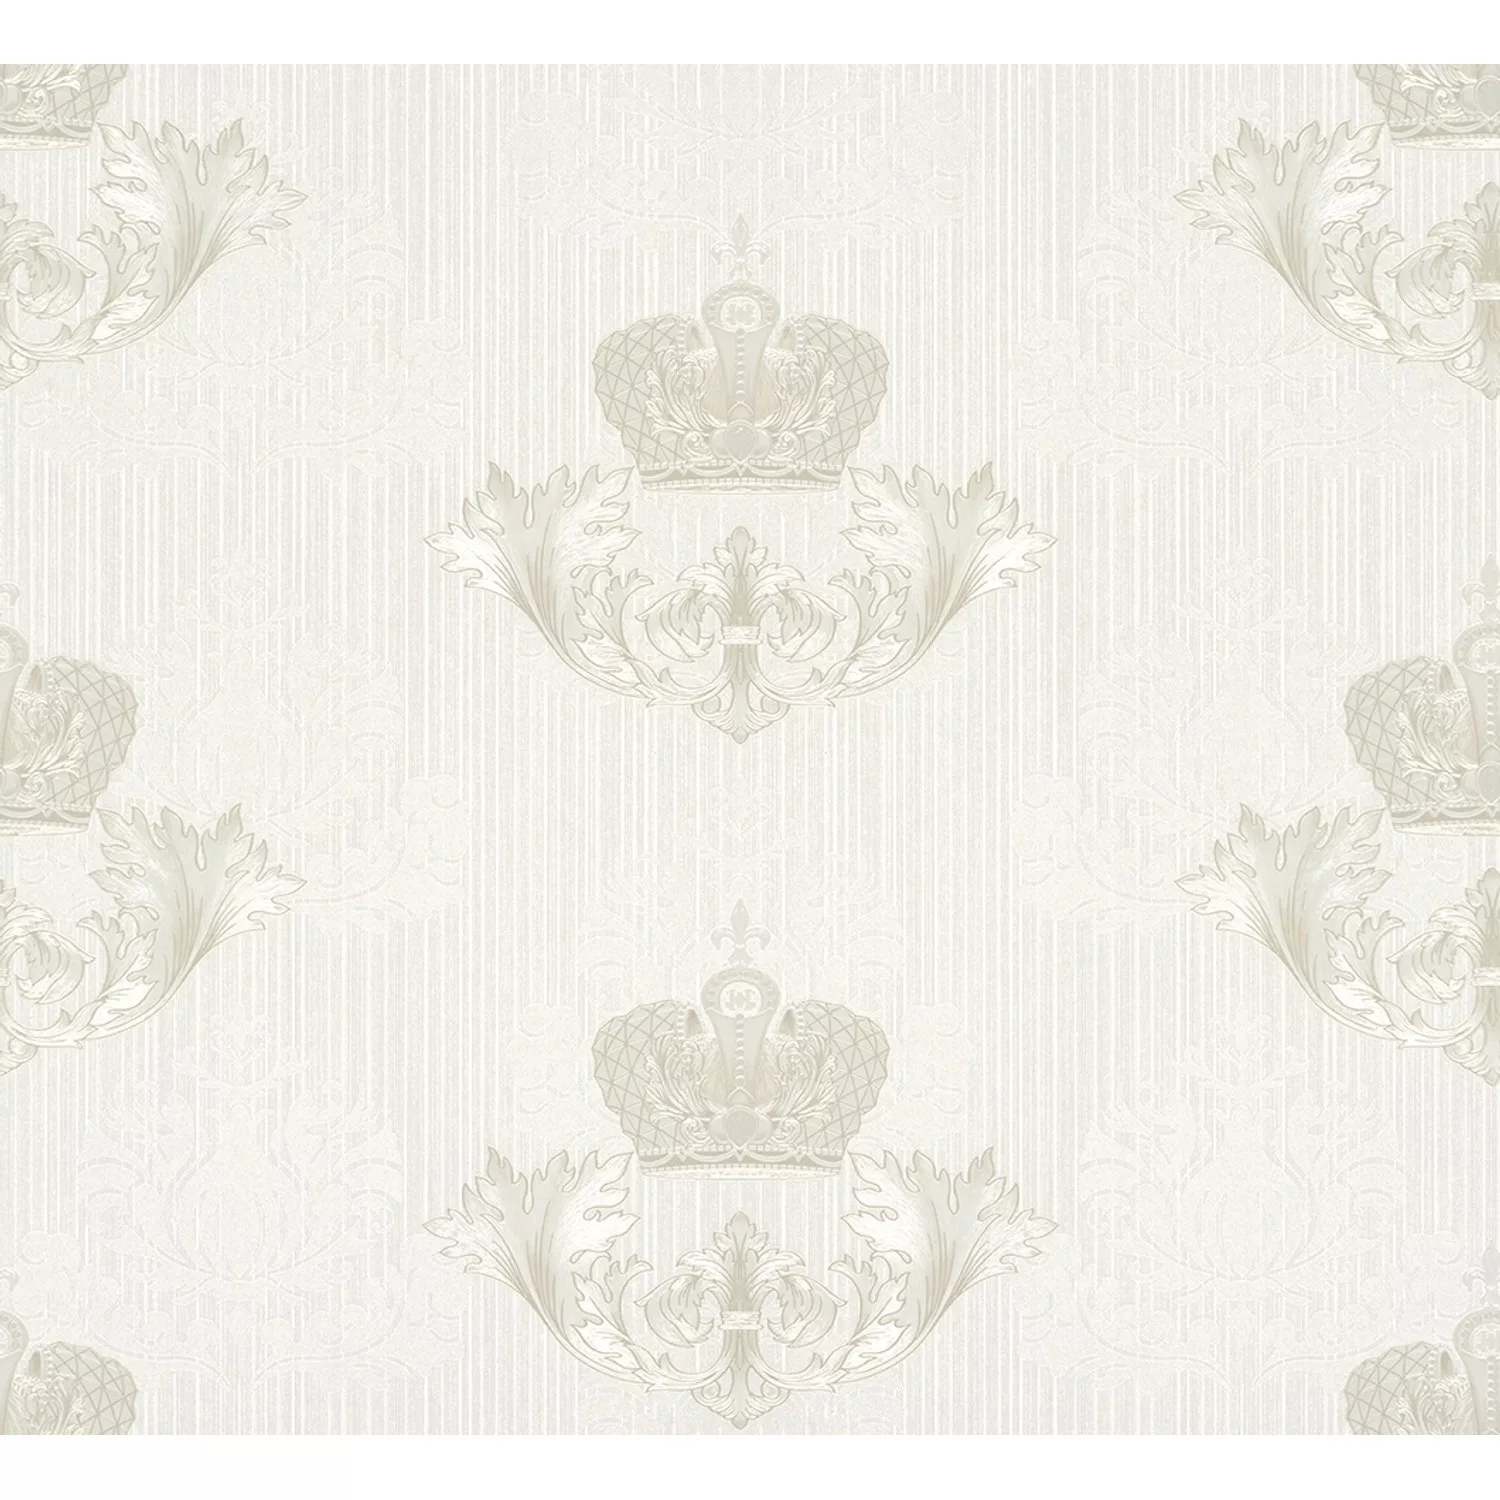 Glööckler Vliestapete Imperial Krone Blattmotiv Wappenoptik Pearl günstig online kaufen